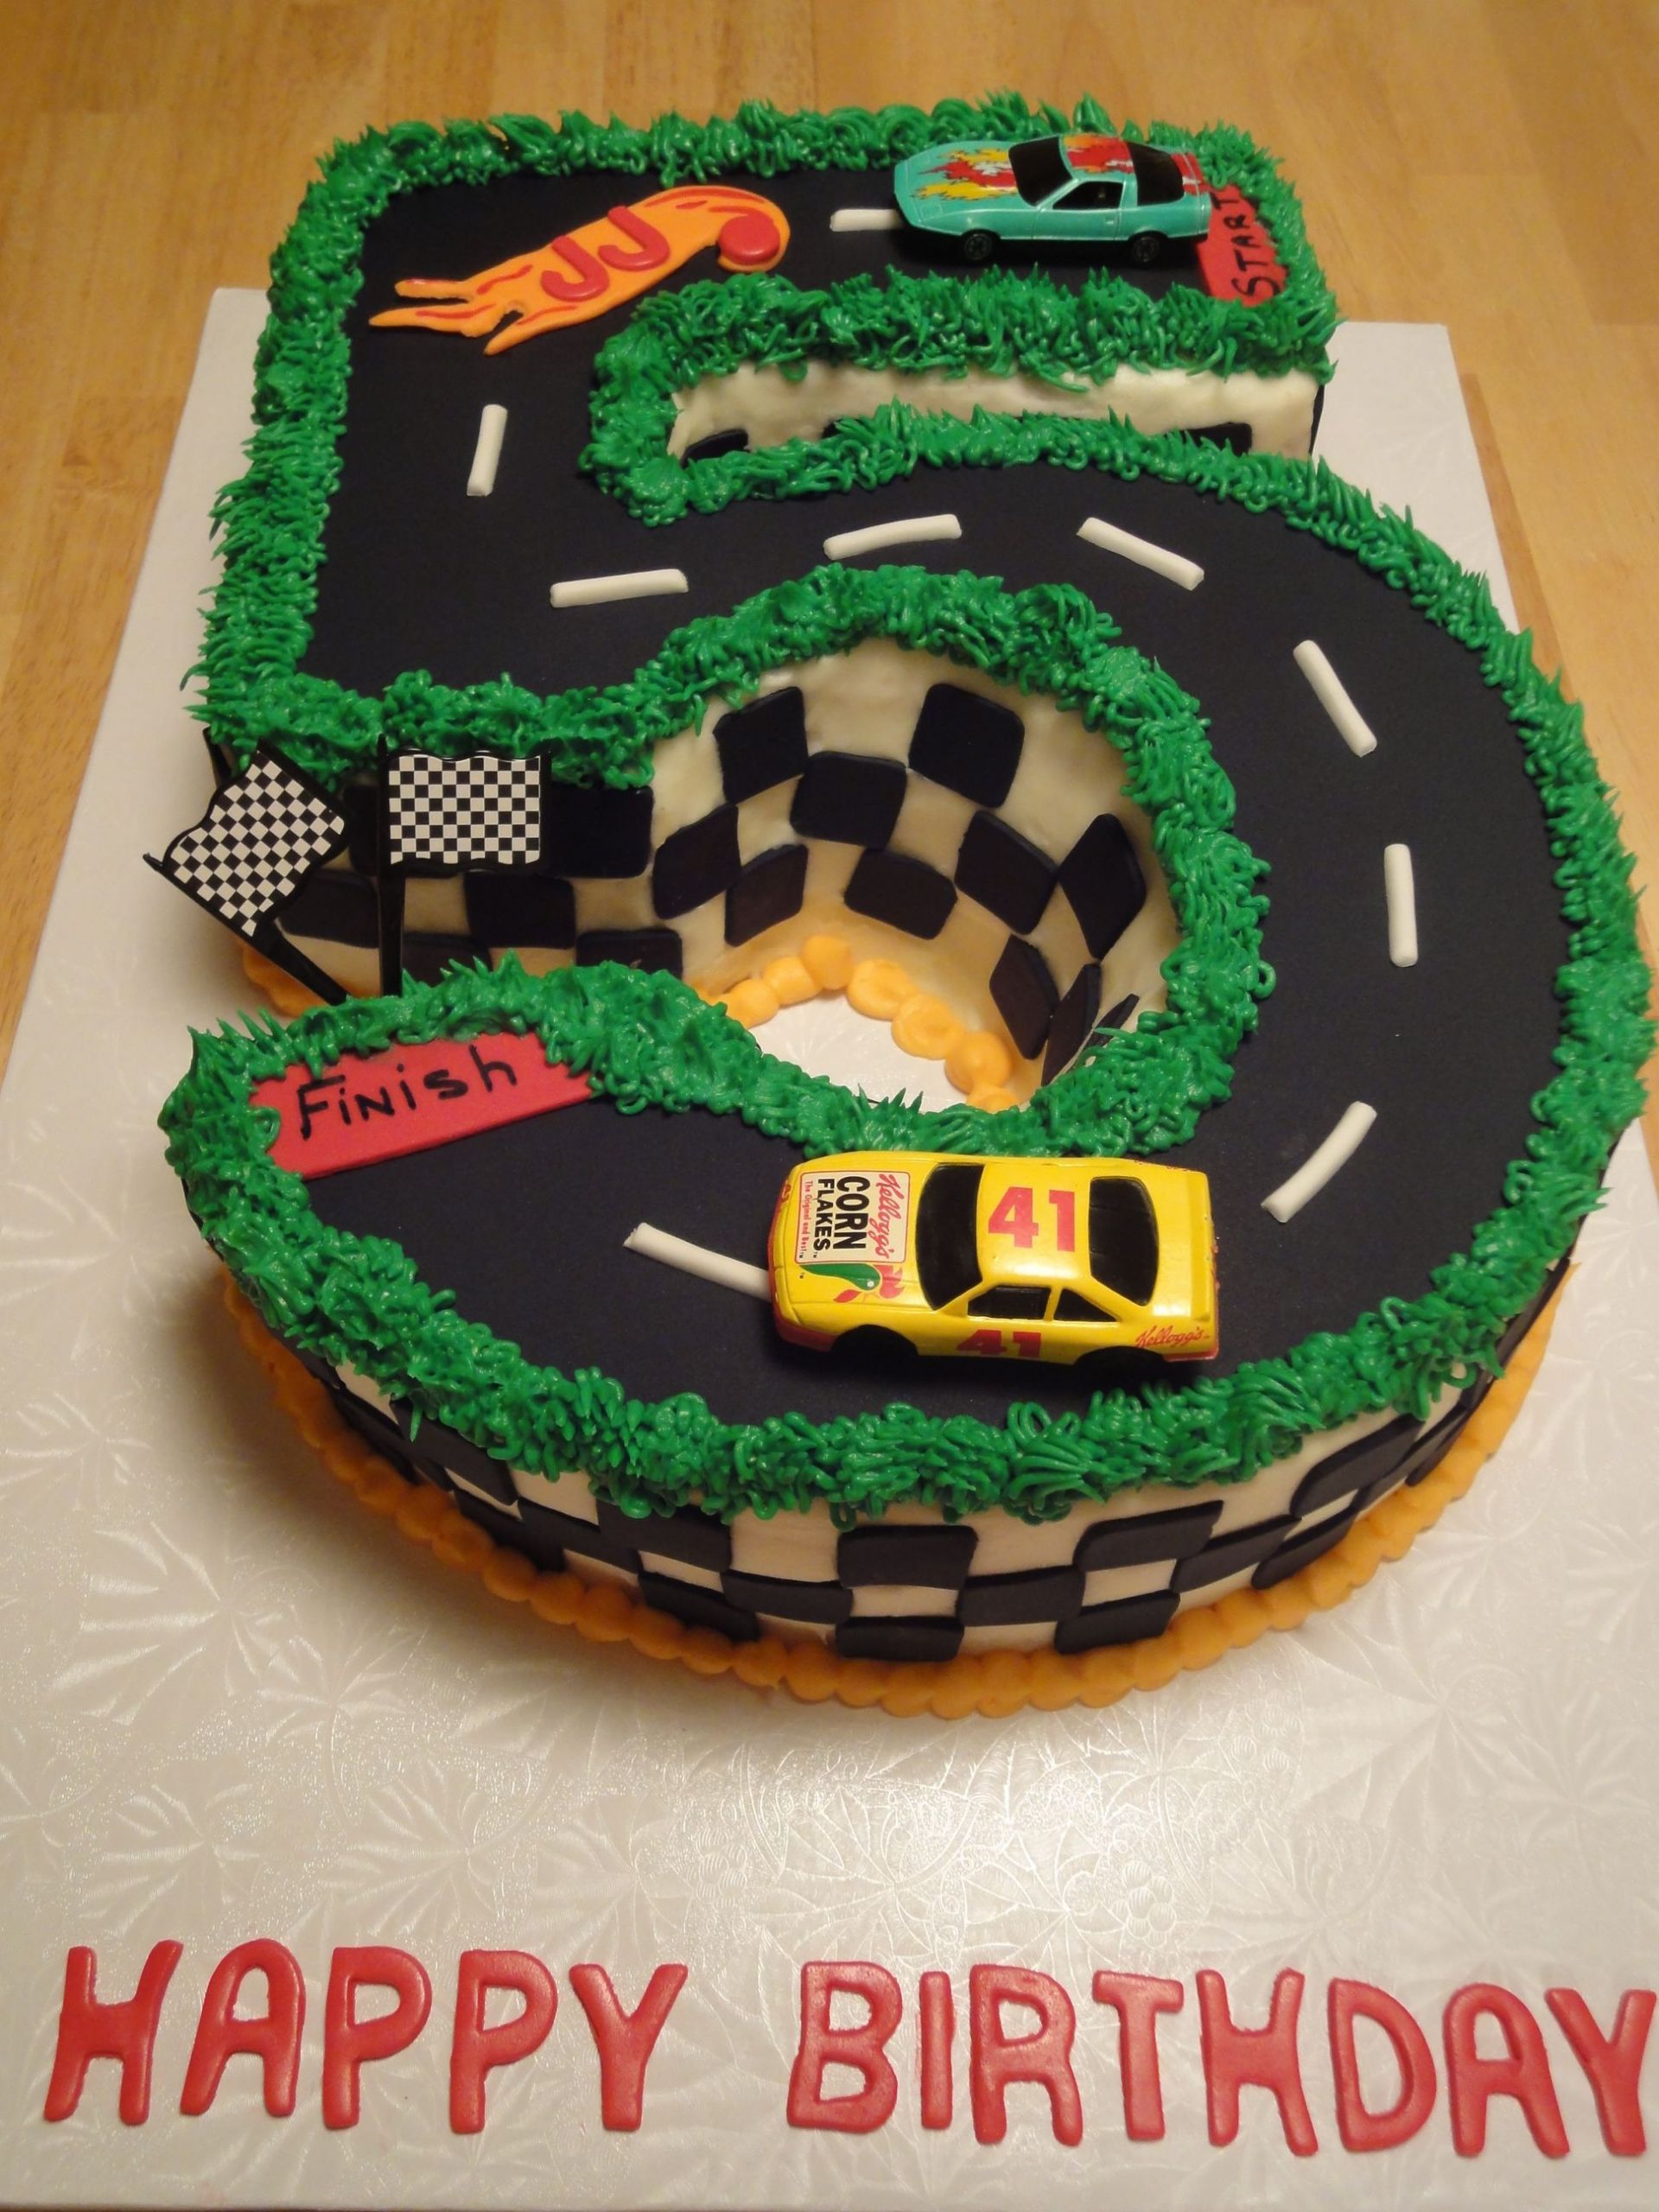 Birthday Party Ideas For 5 Year Old Boy
 Happy Birthday to a 5 year old boy Hot wheels cake